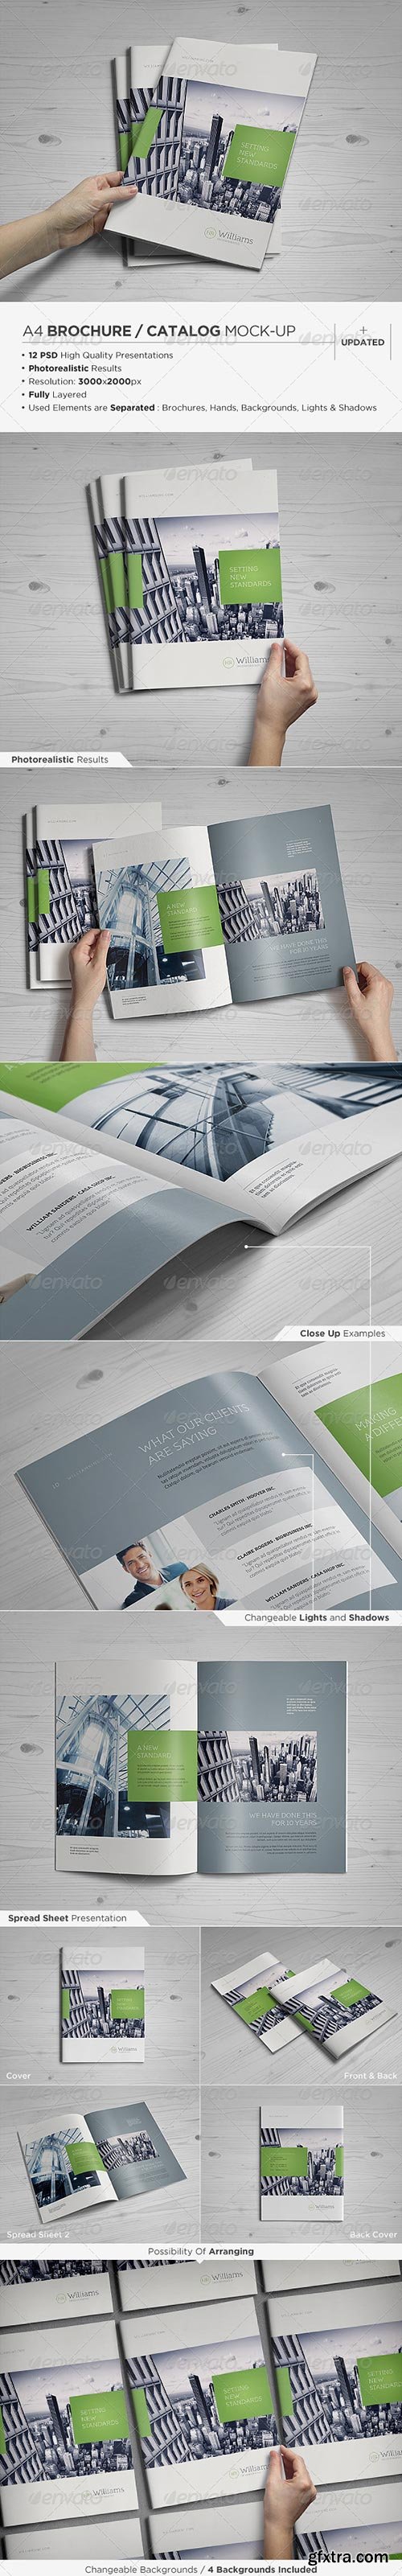 GraphicRiver - A4 Brochure / Catalog Mock-Up 4236480